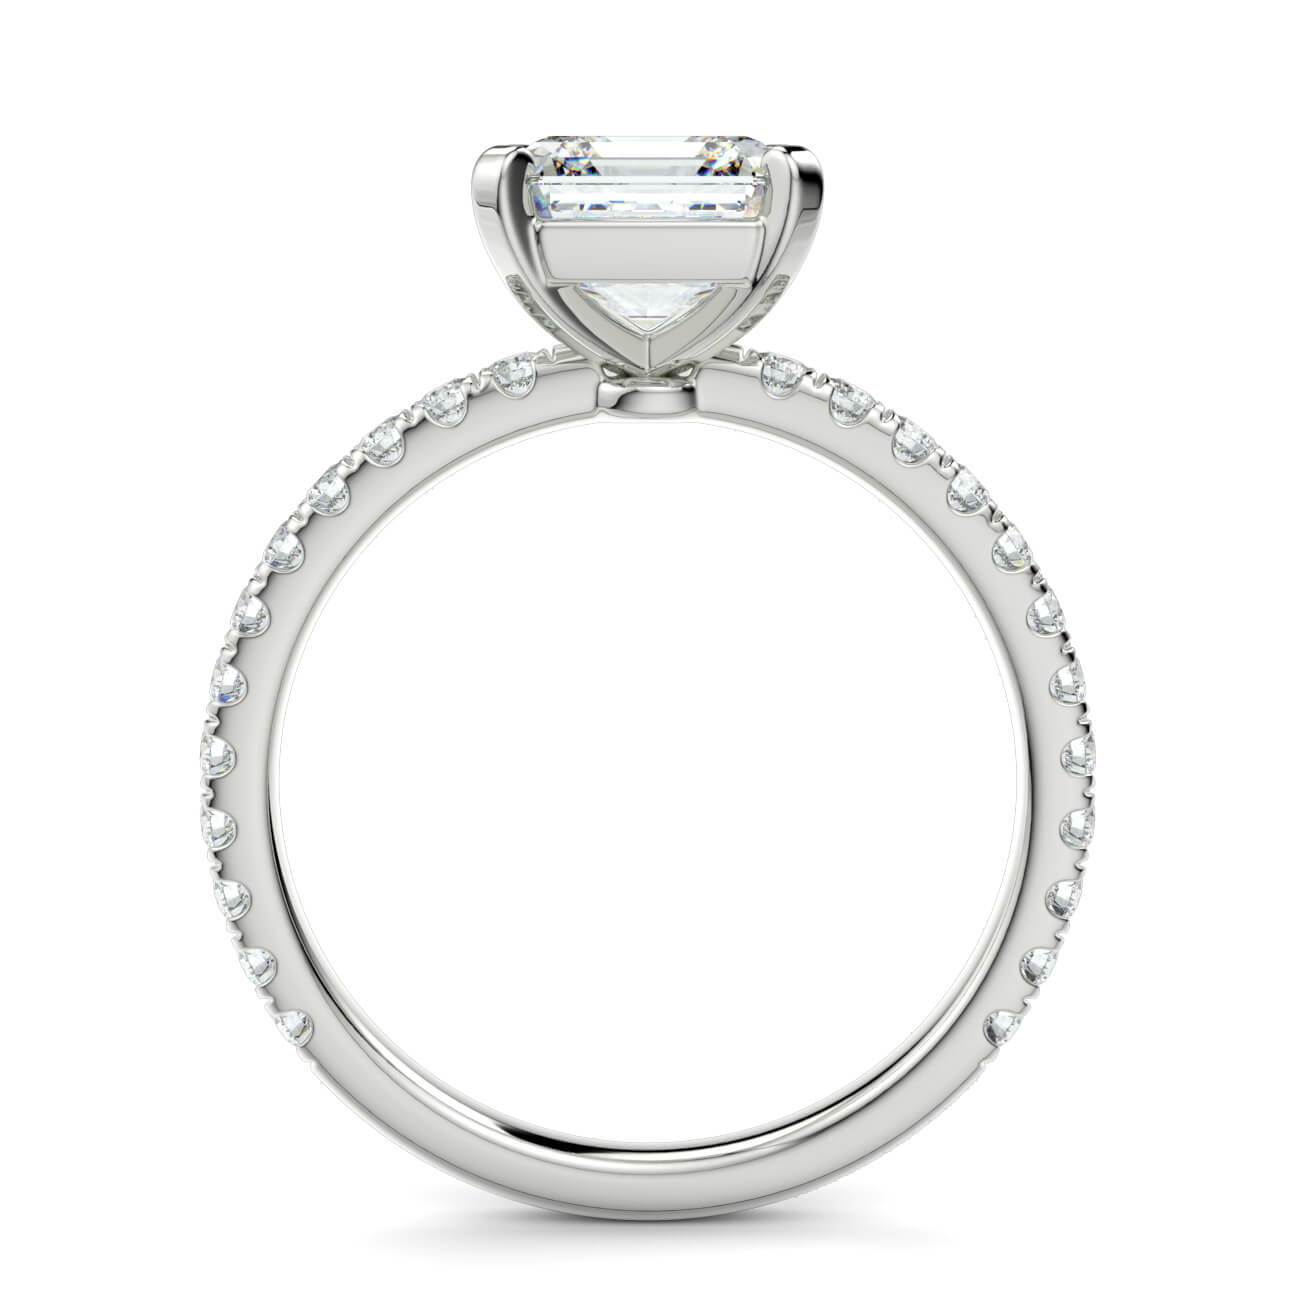 Delicate ‘Liat’ Asscher Cut Diamond Engagement Ring in 18k White Gold – Australian Diamond Network